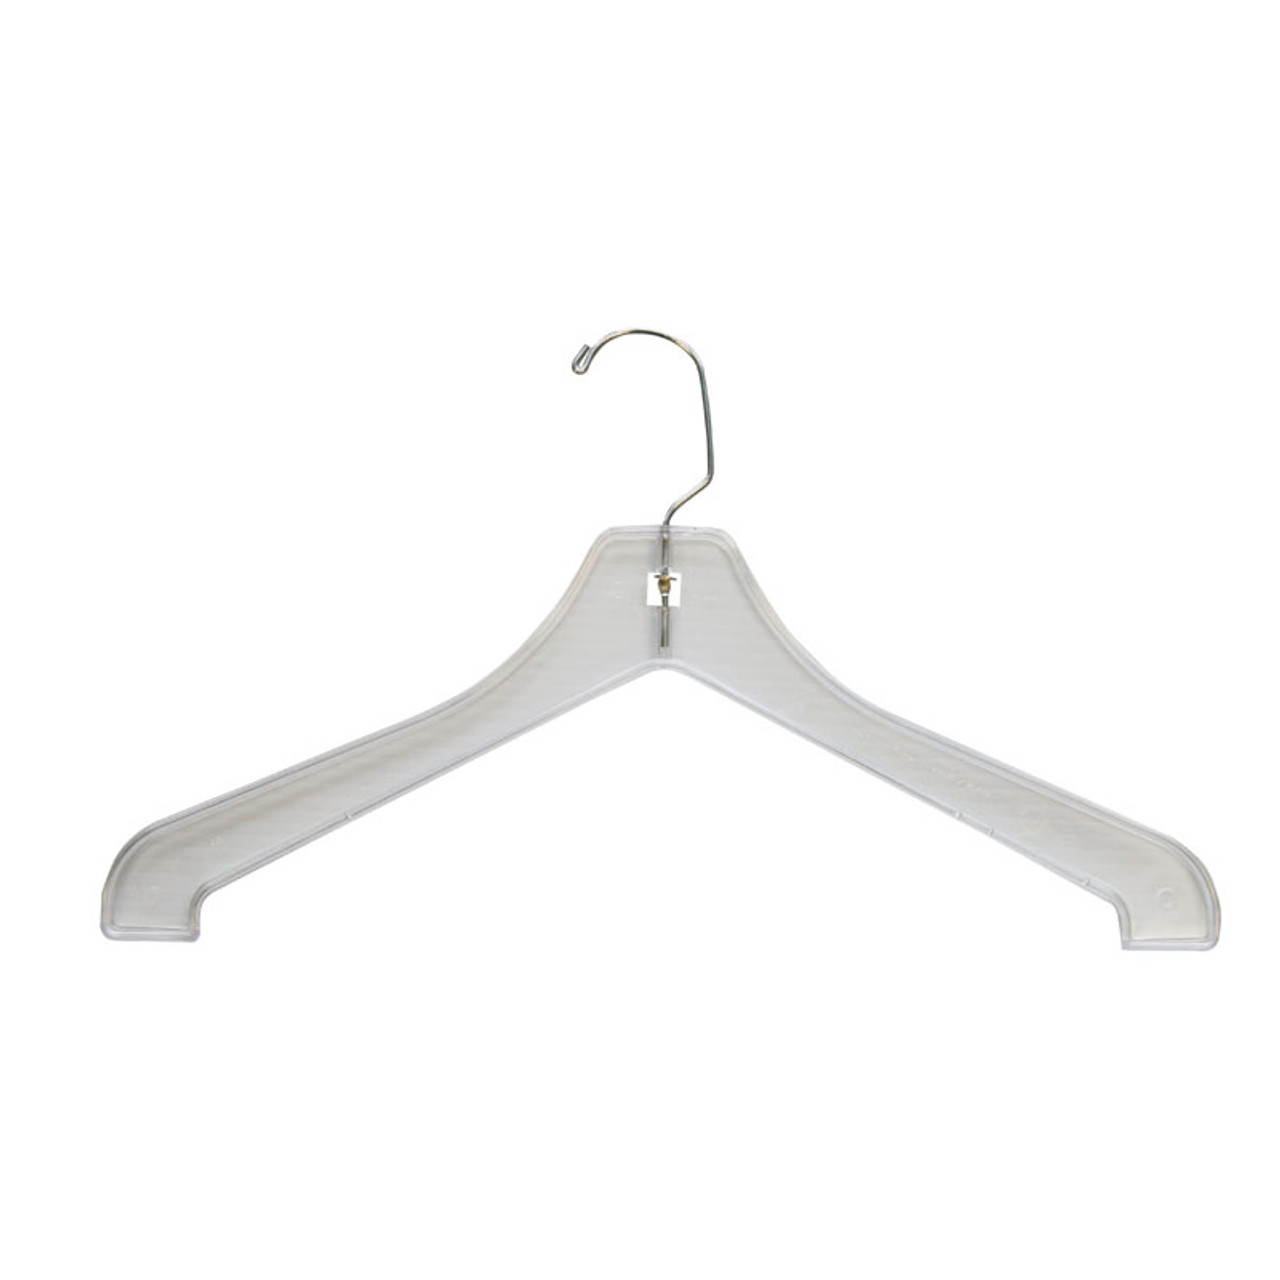 17" Clear Heavyweight Coat & Sweater Hanger